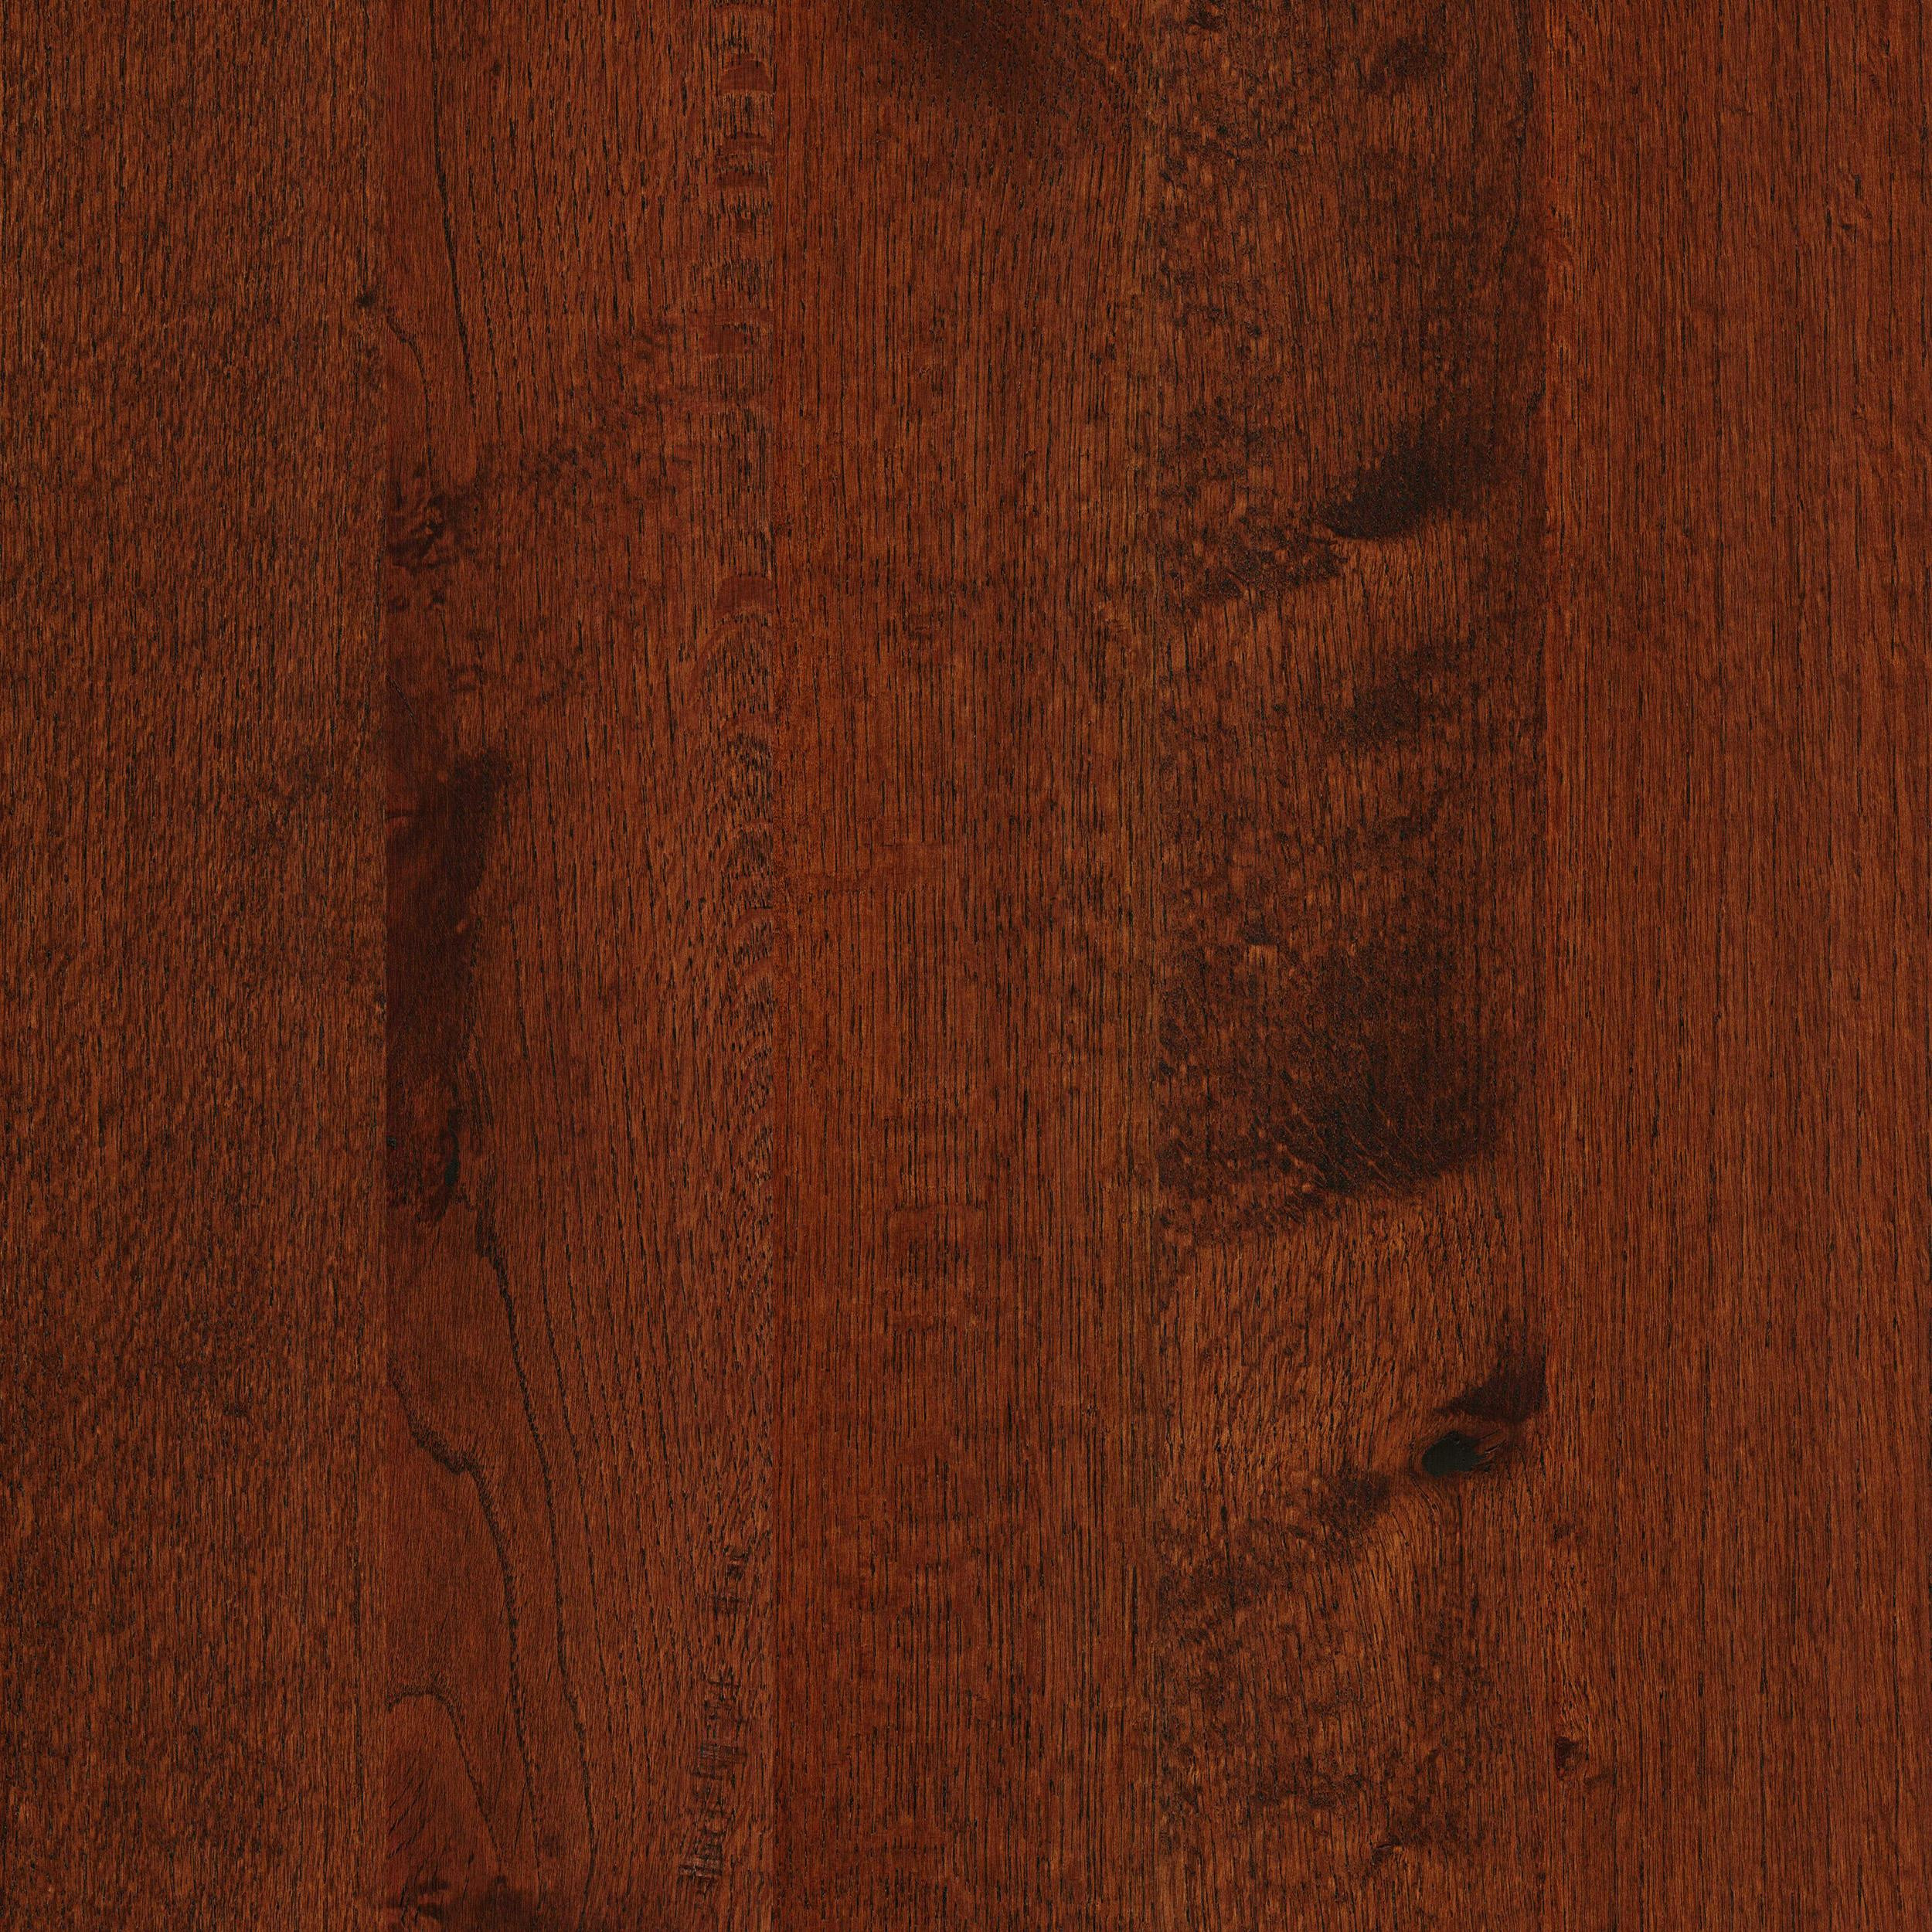 Hardwood Floor Width Sizes Of Timber Hardwood Red Oak sorrell 5 Wide solid Hardwood Flooring Inside Red Oak sorrell Timber solid Approved Bk